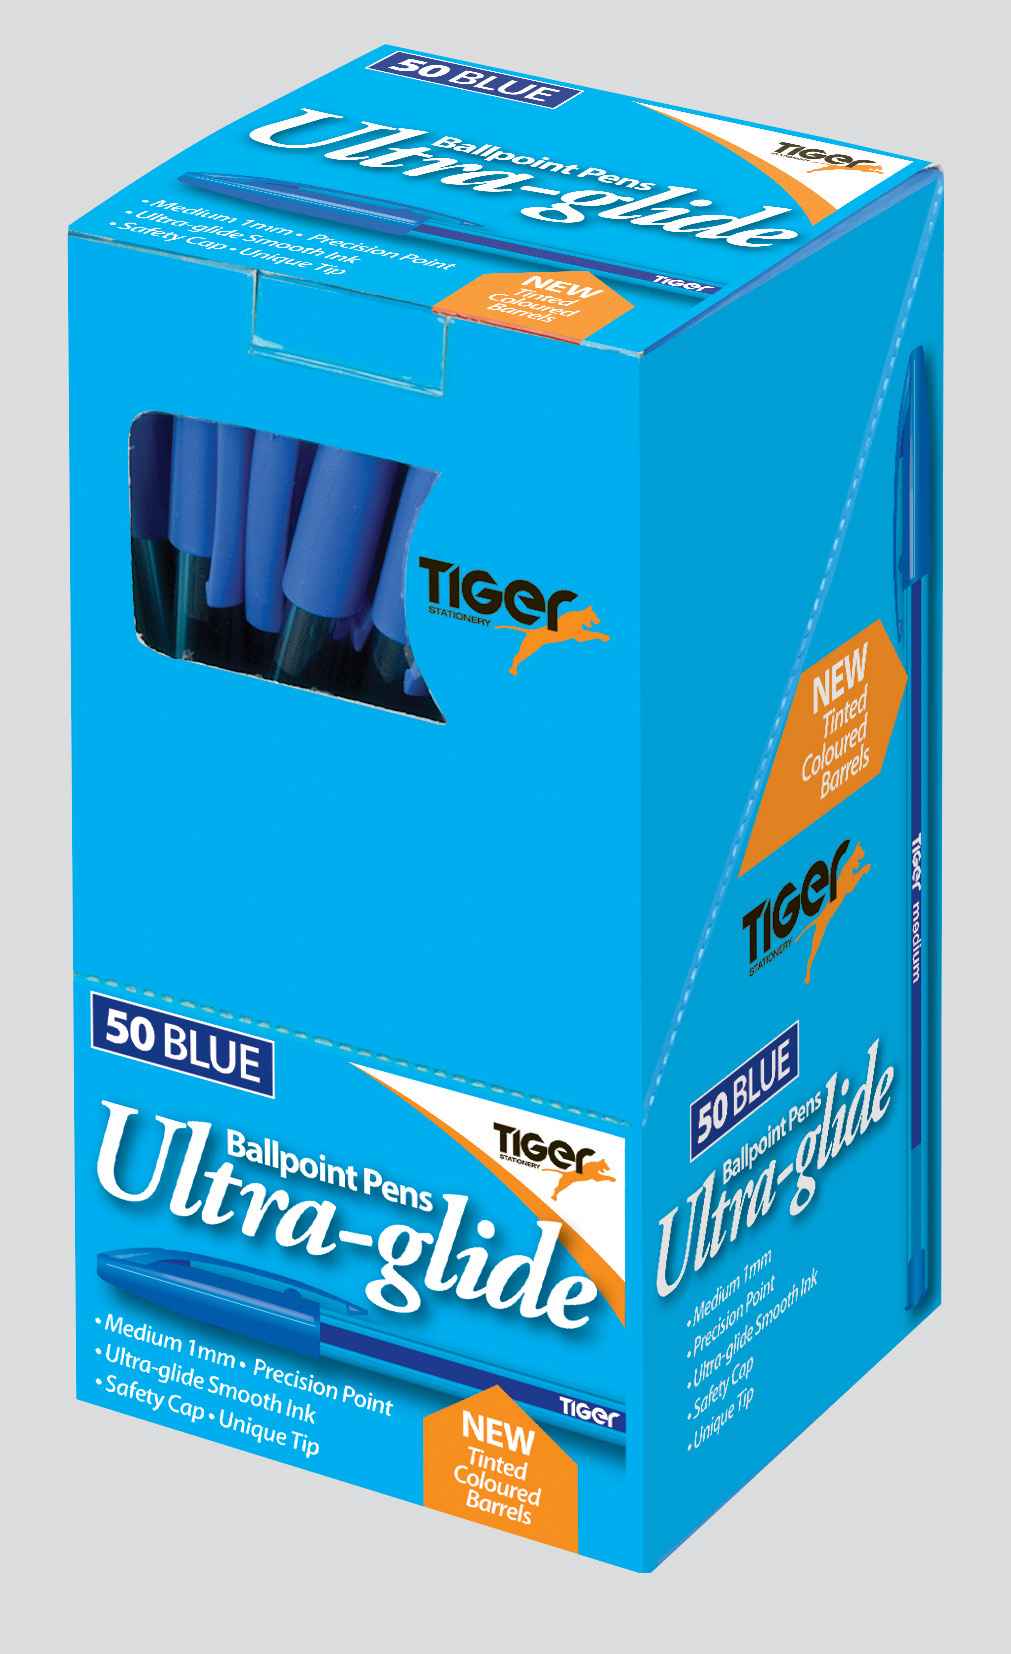 Tiger Ball Point Pens Box 50 - Blue